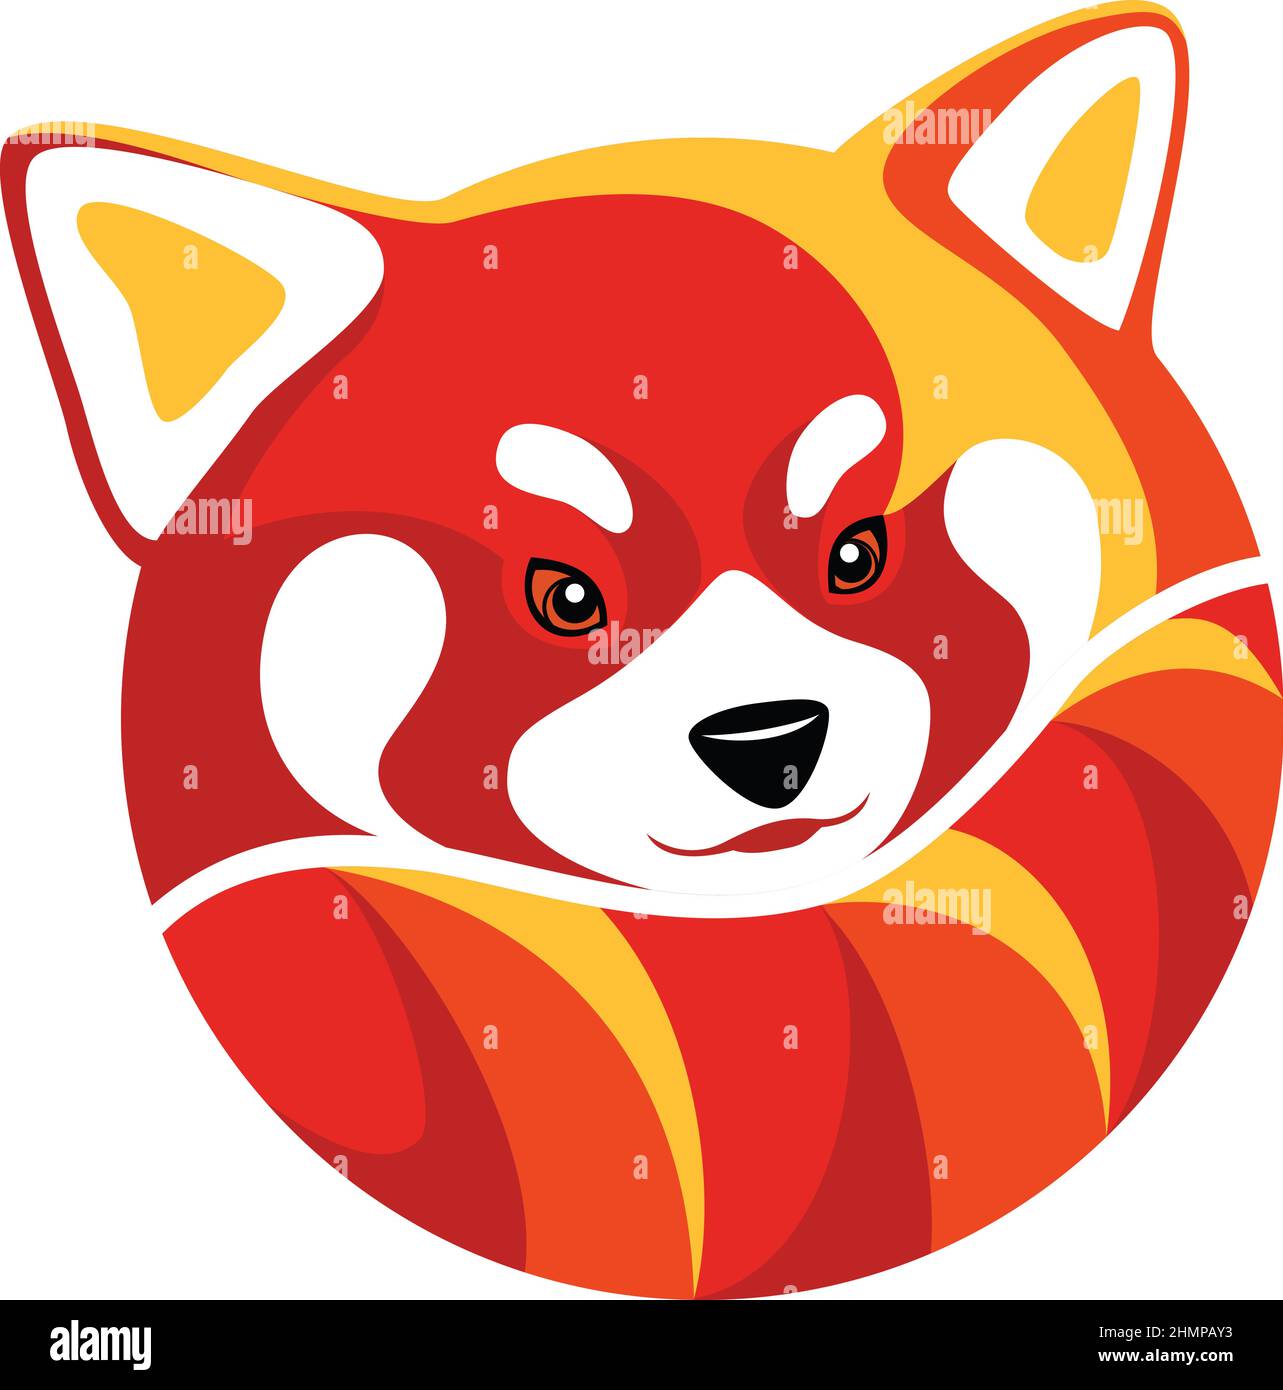 Red Panda Round Logo Design Stock Vector Image & Art - Alamy